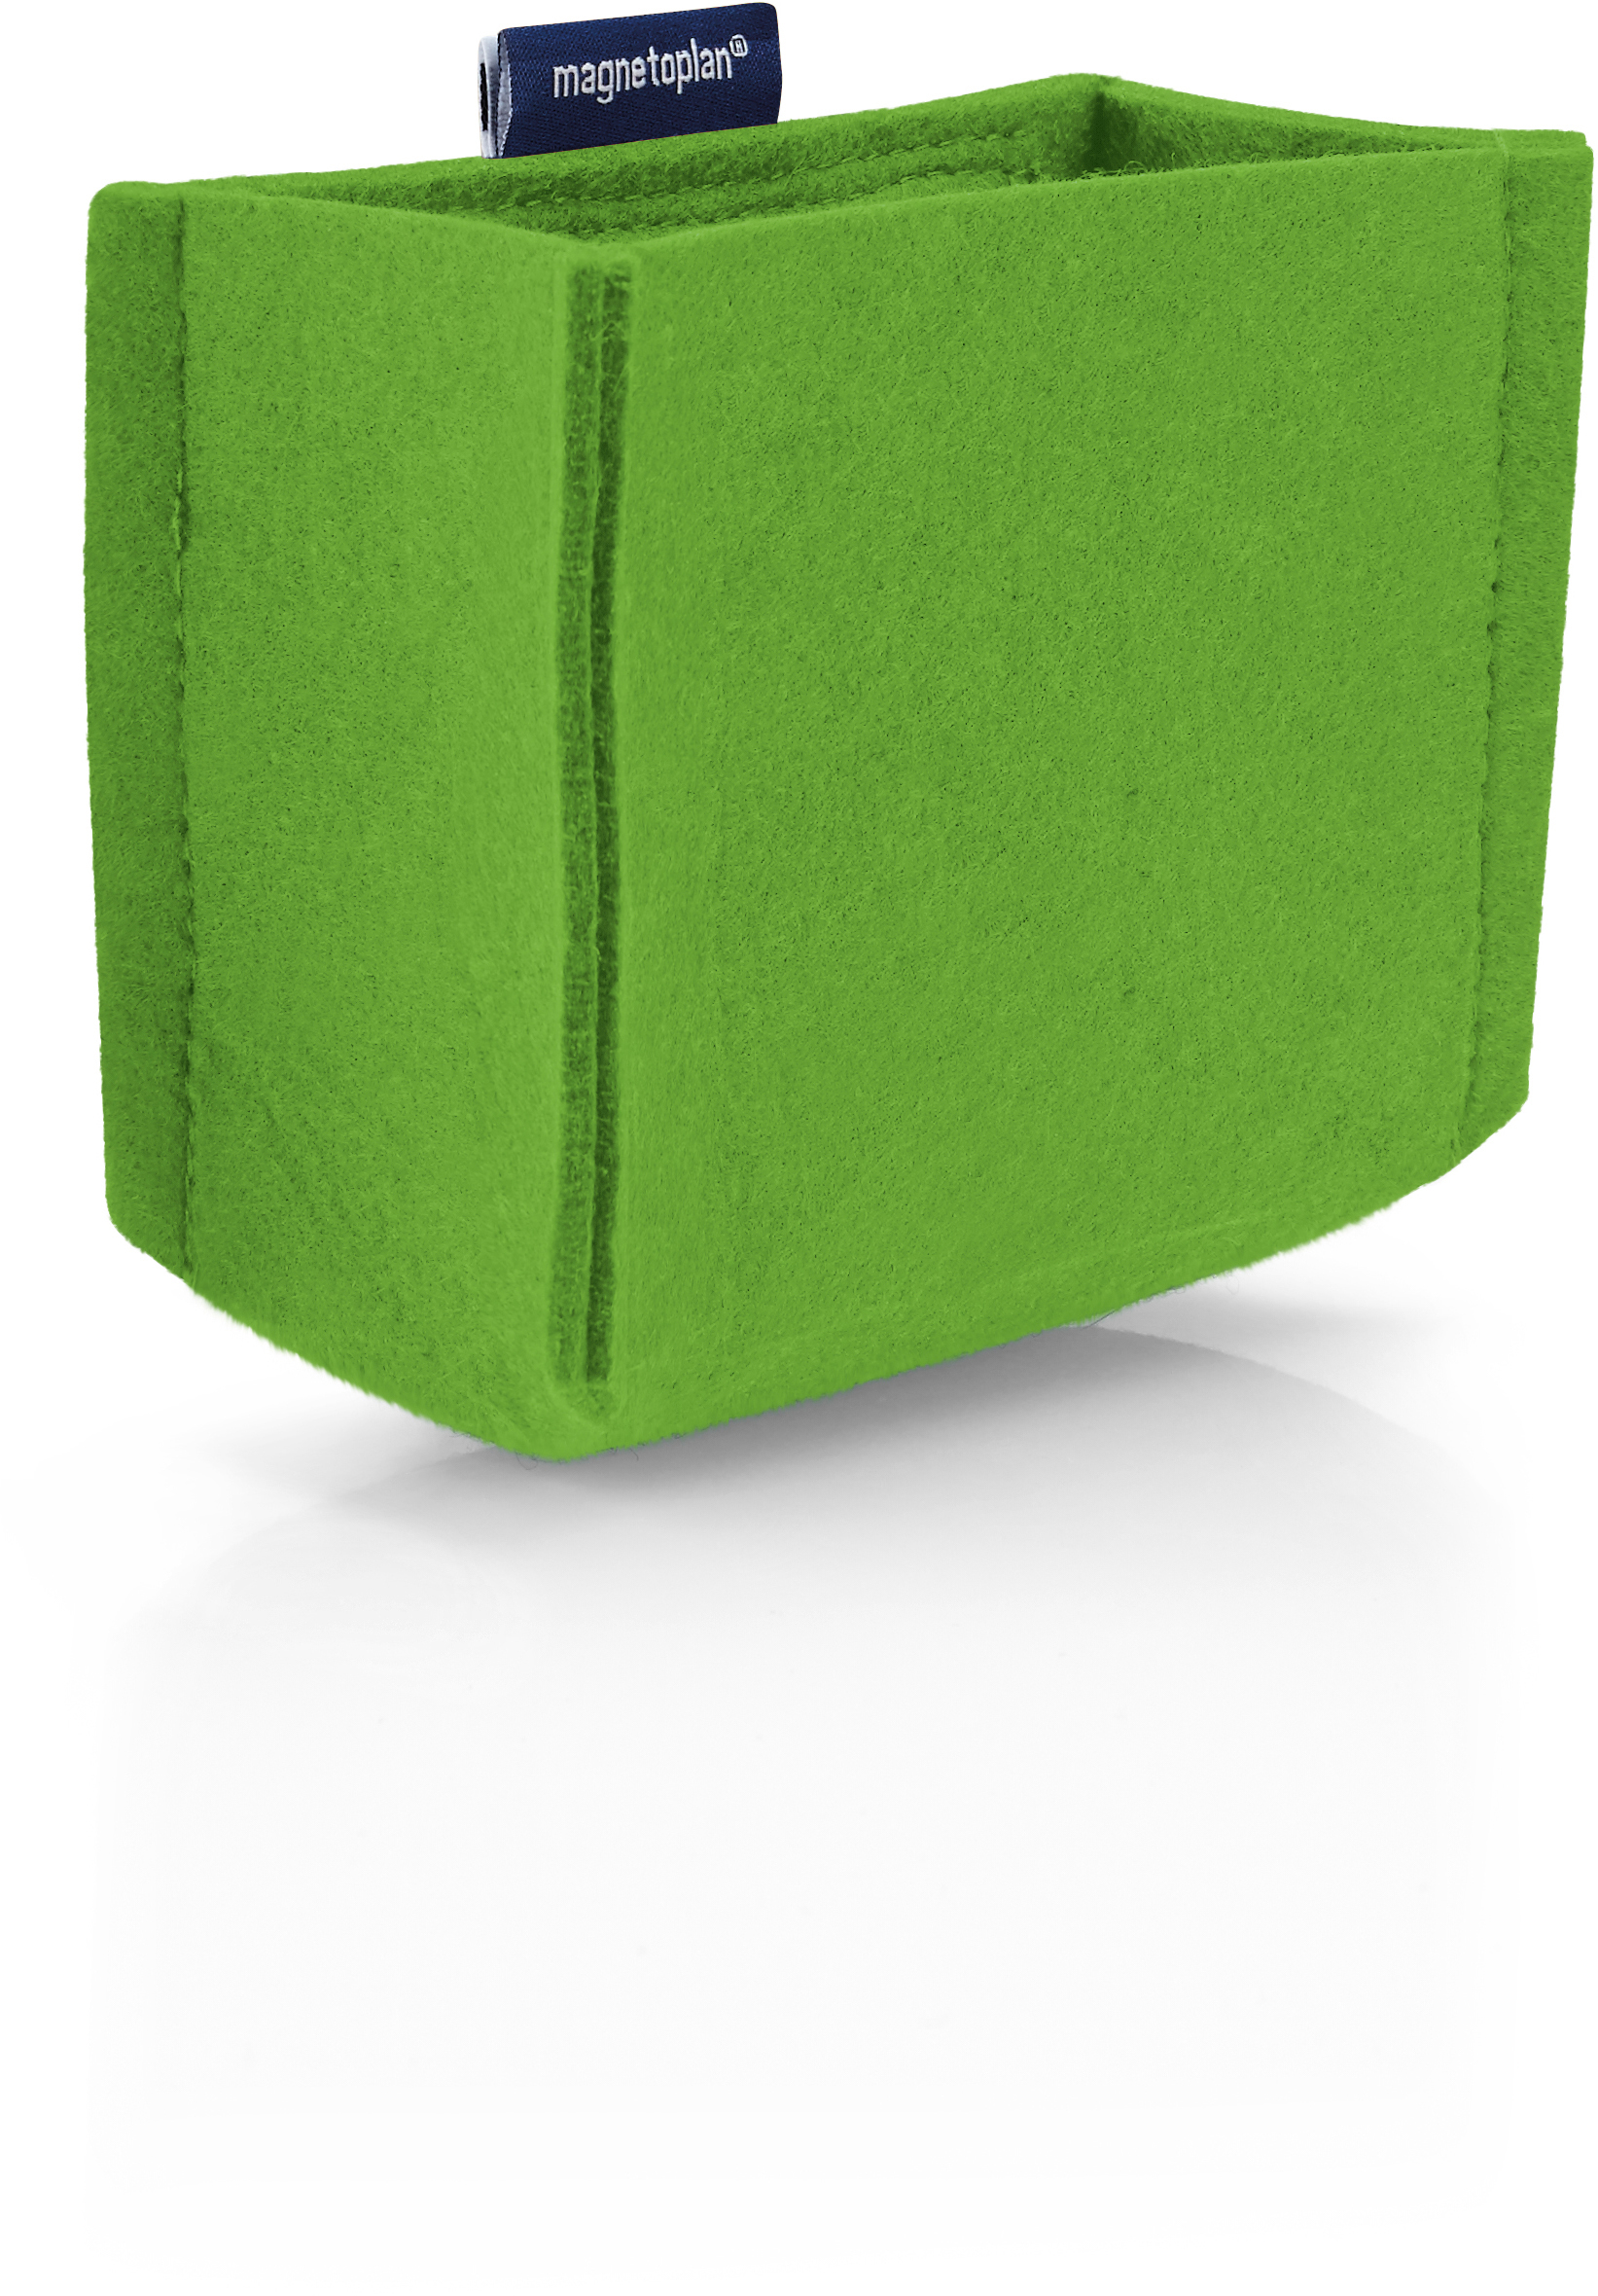 MAGNETOPLAN Porte stylo magnetoTray M 1227705 vert, feutre recyclé vert, feutre recyclé